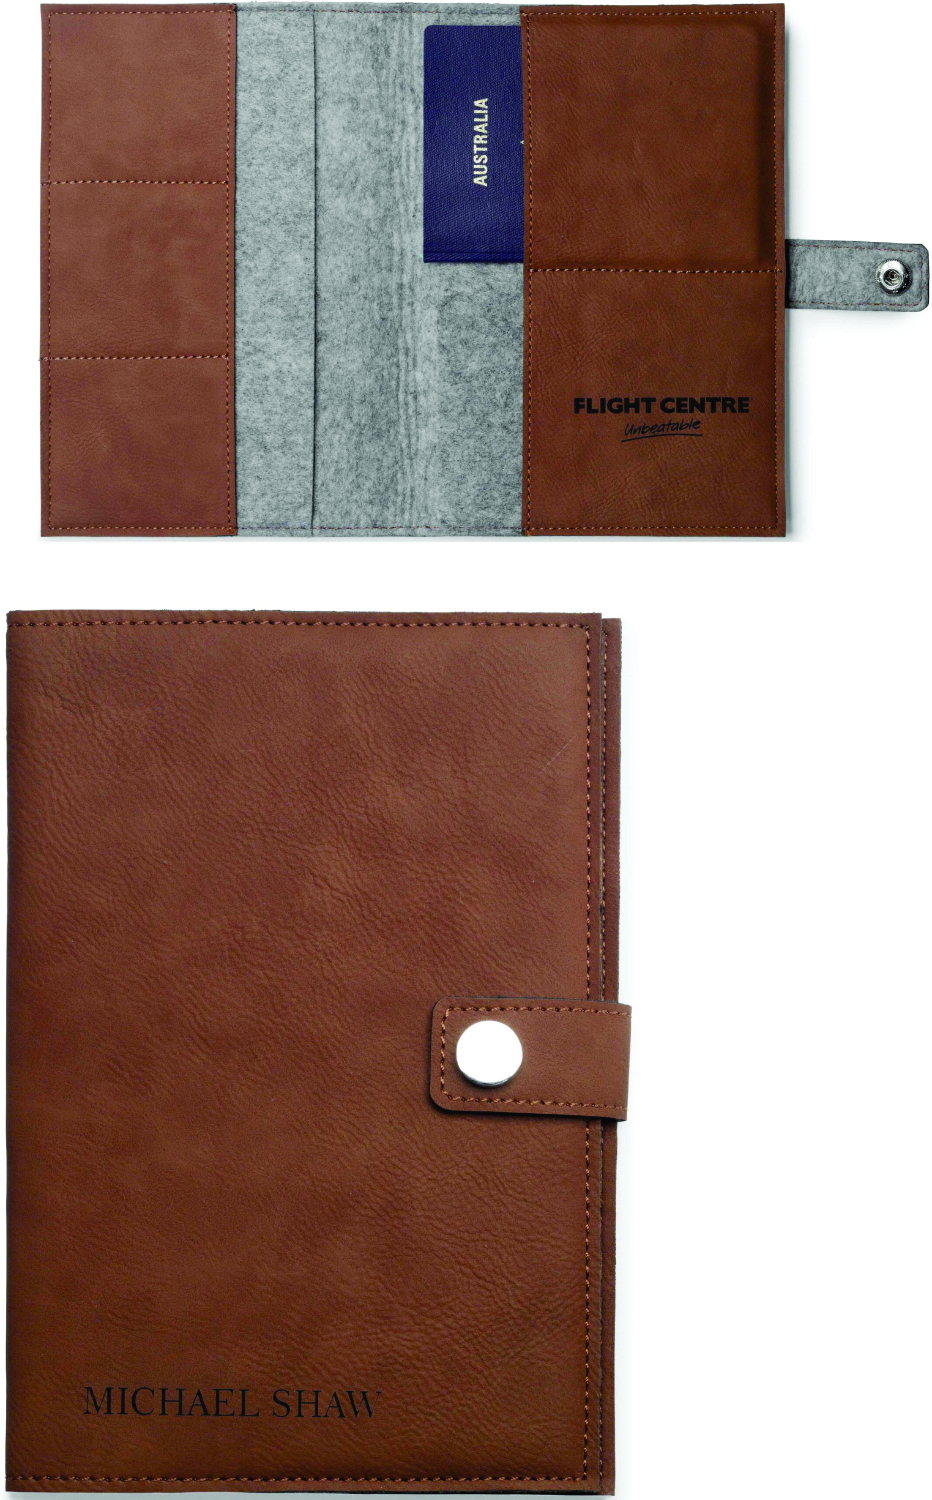 Leatherette Passport Wallet